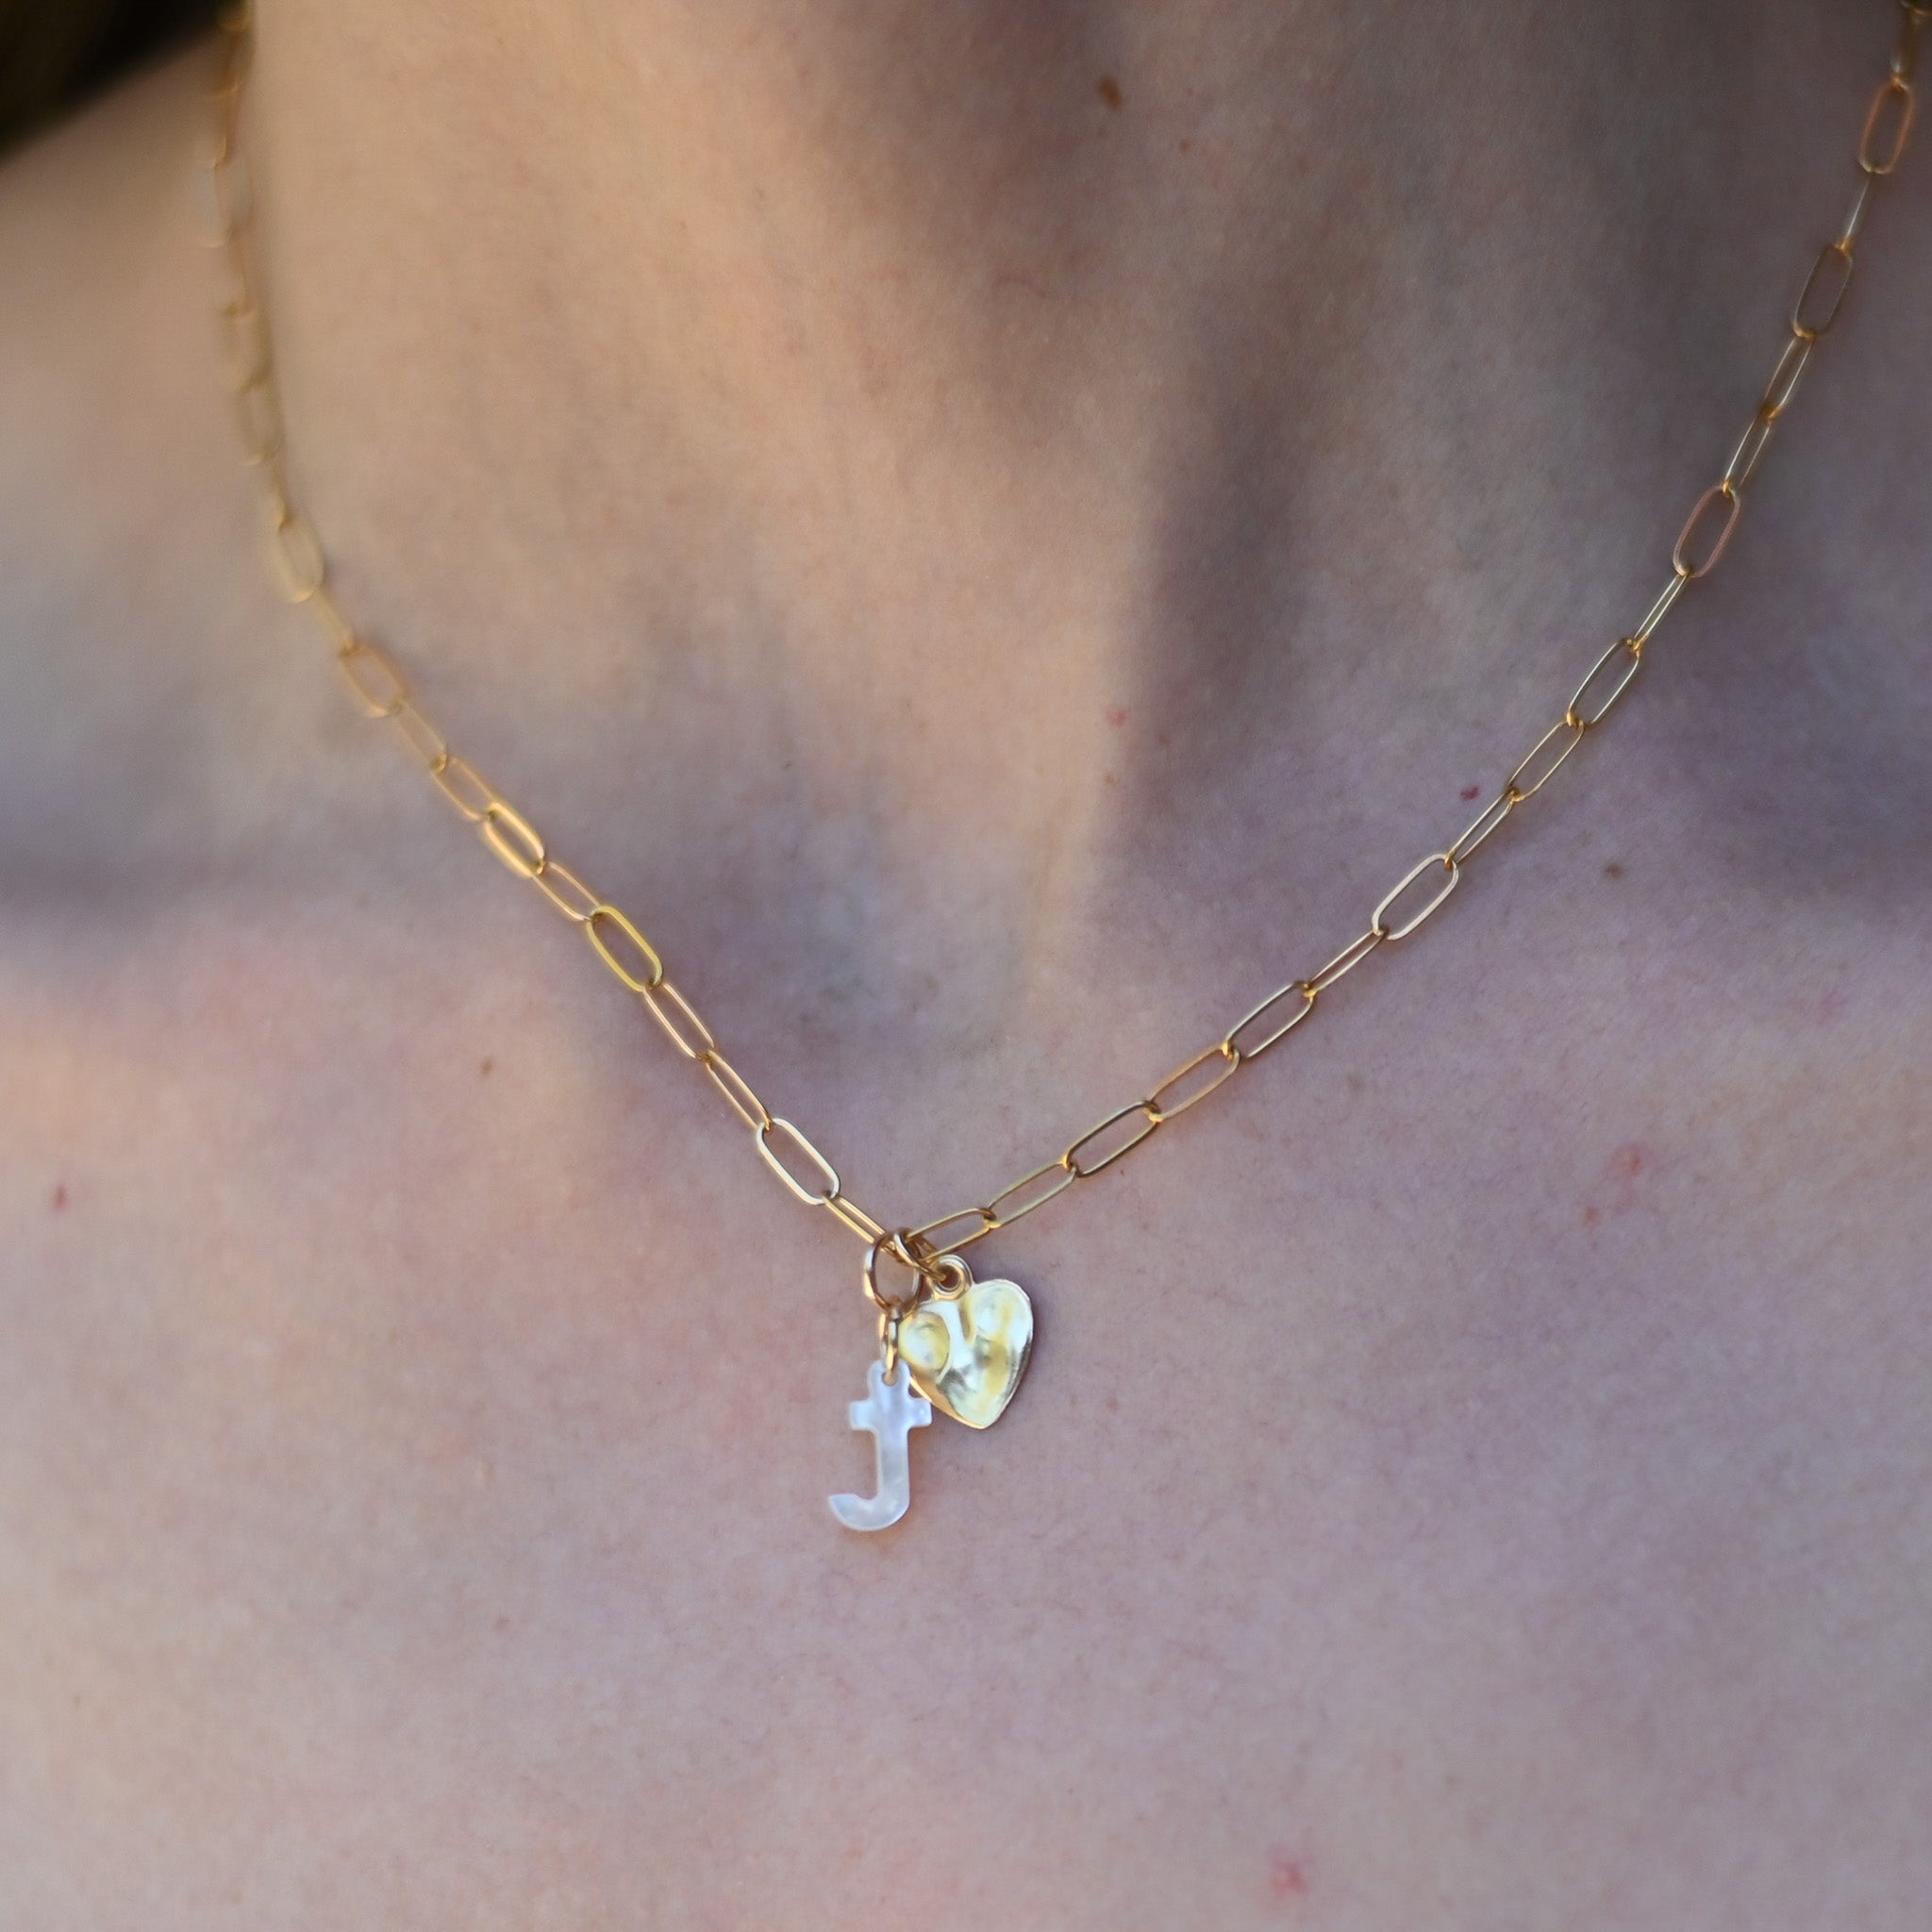 Medium Paper Clip Initial Charm Necklace - Jewel Ya